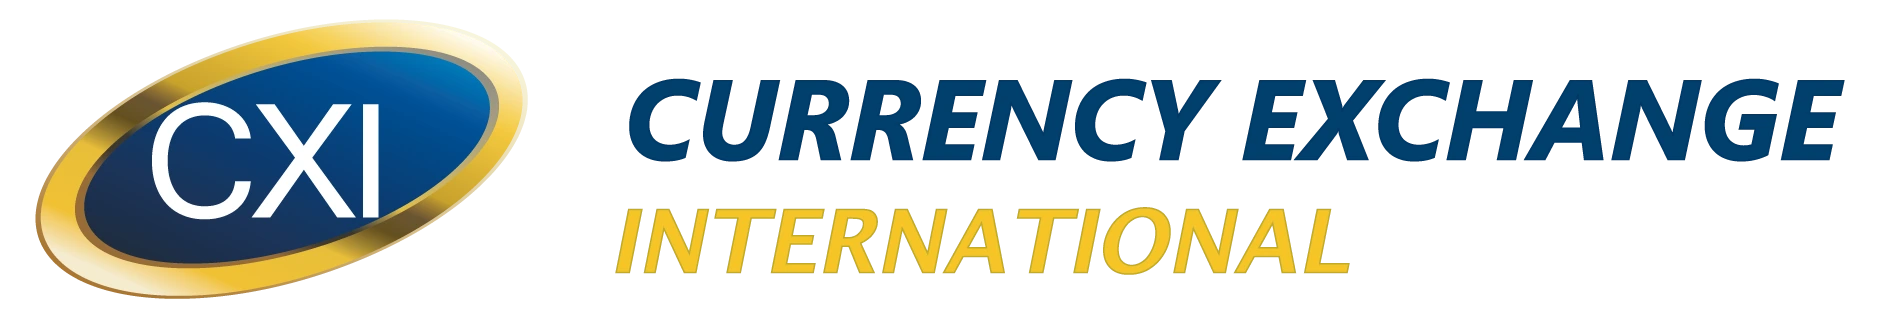 Currency Exchange International Logo